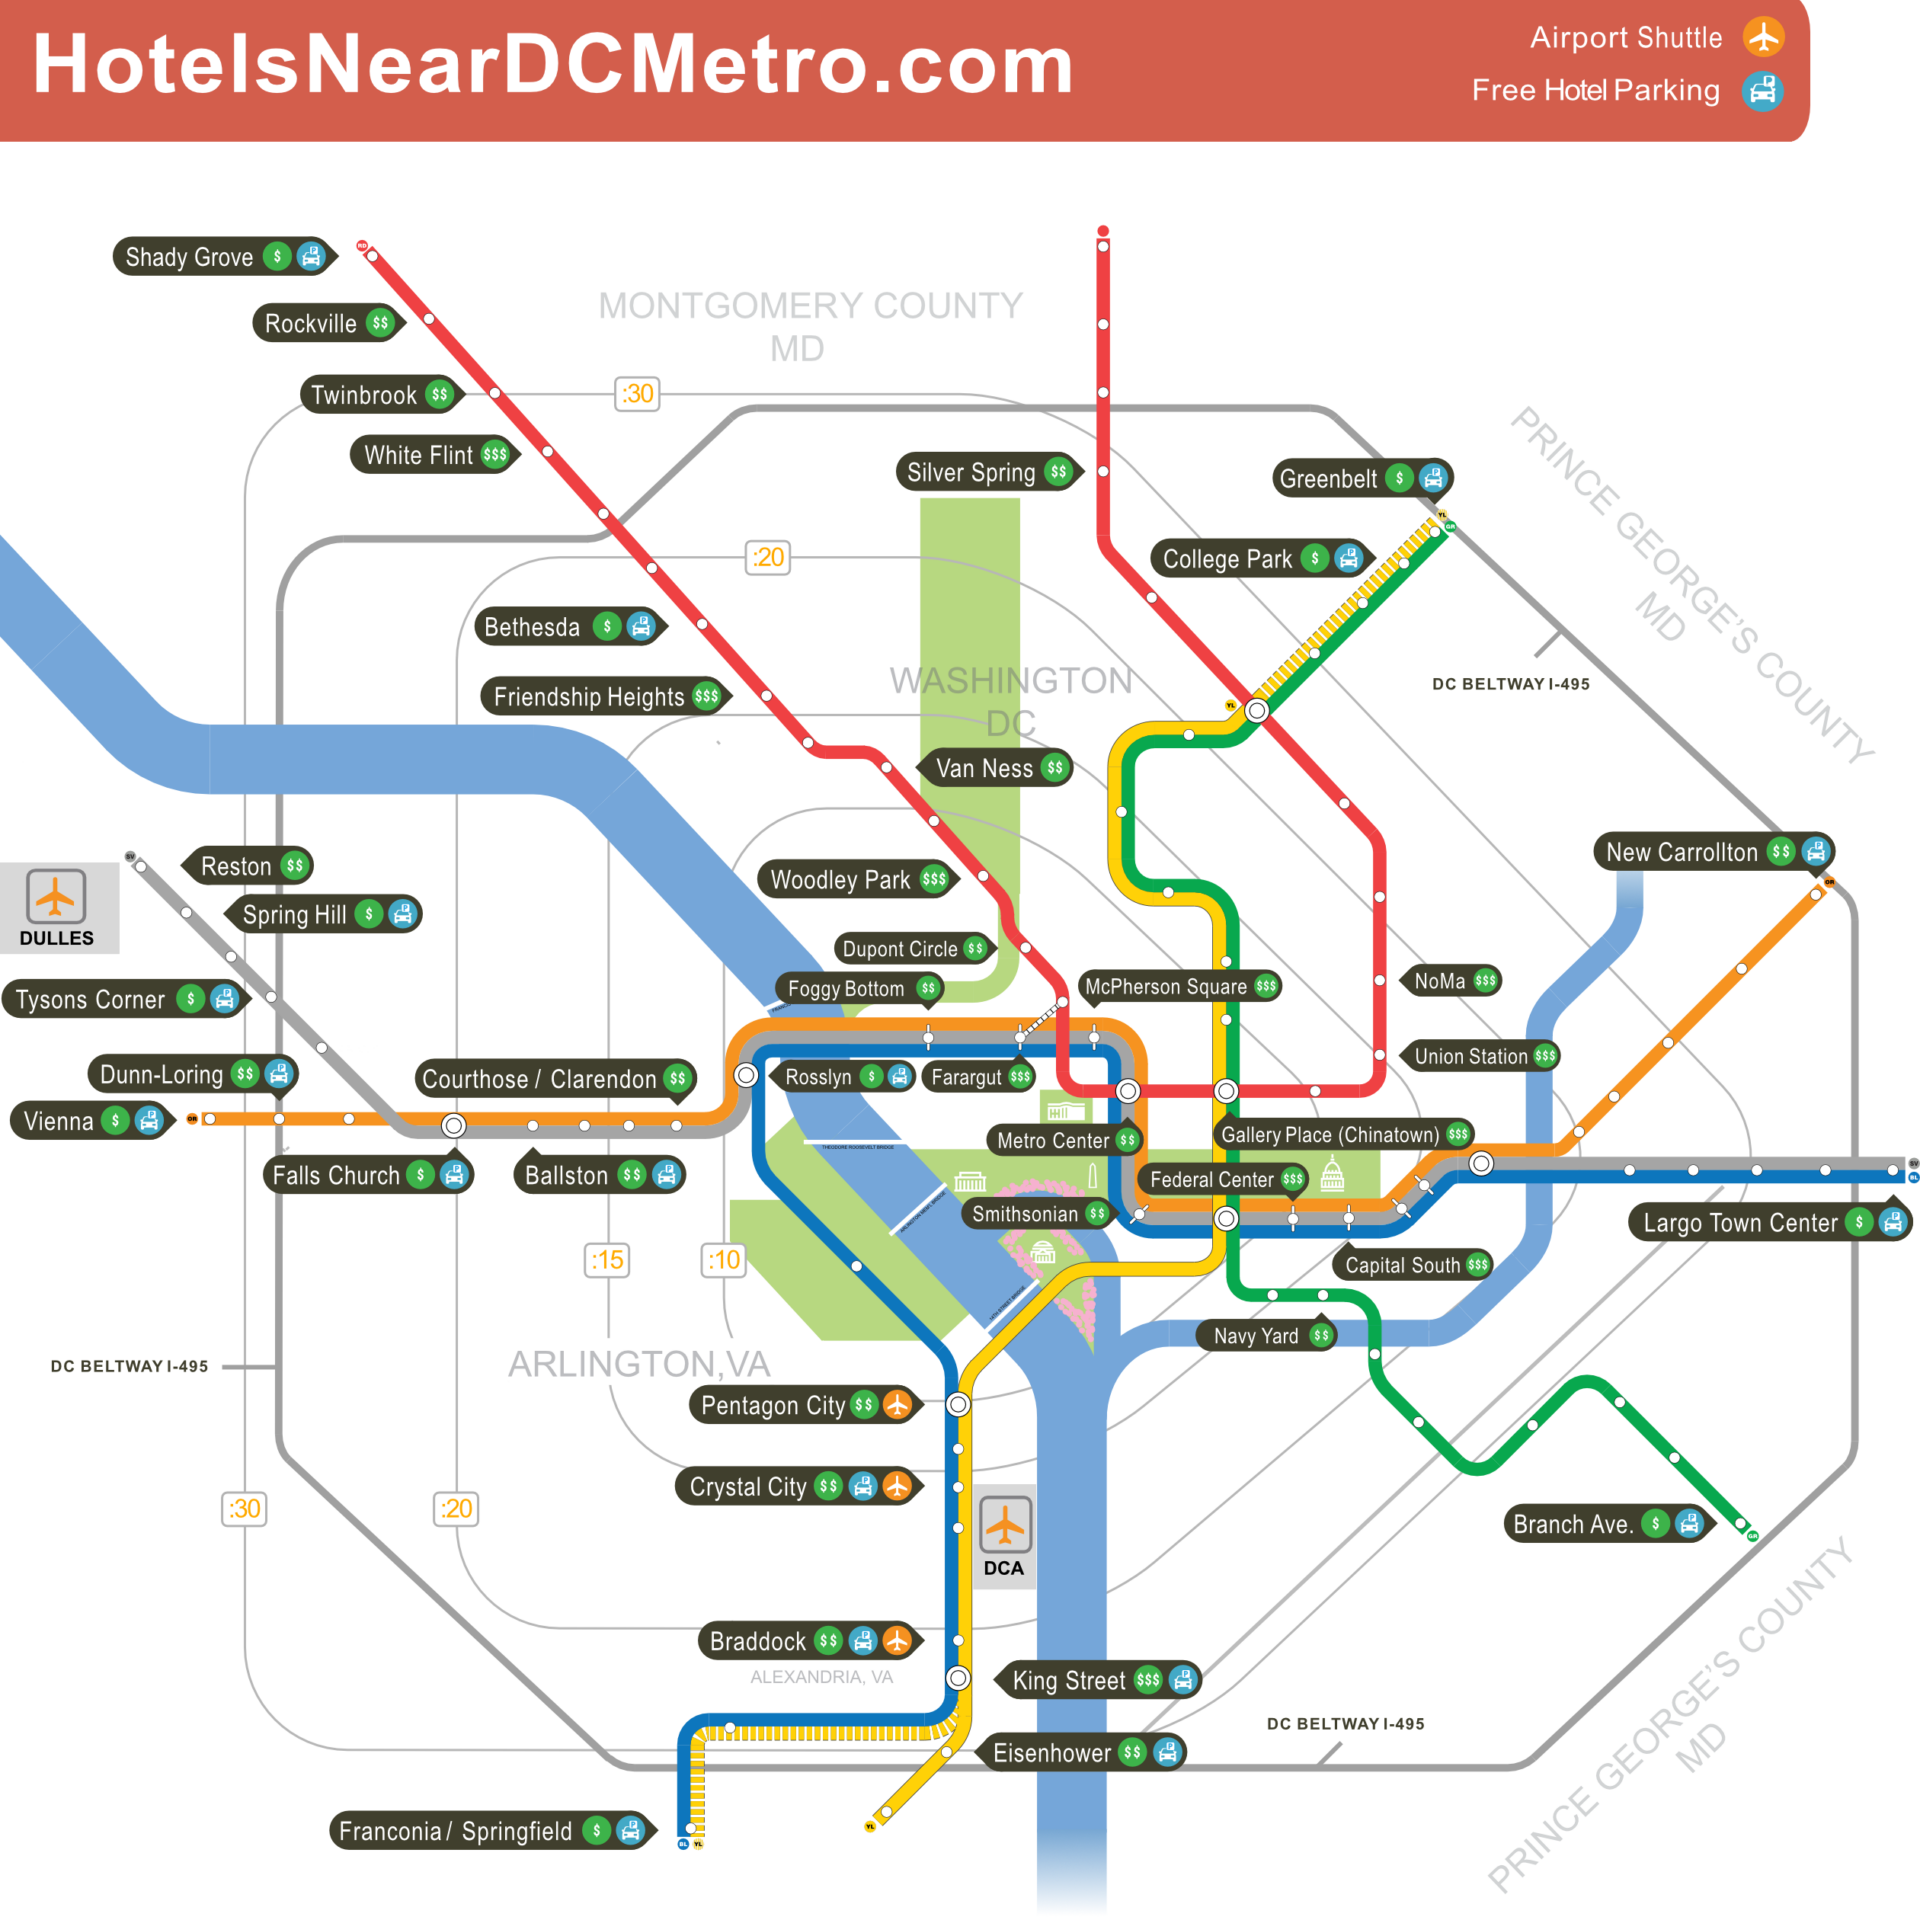 Hotels Near DC Metro Map